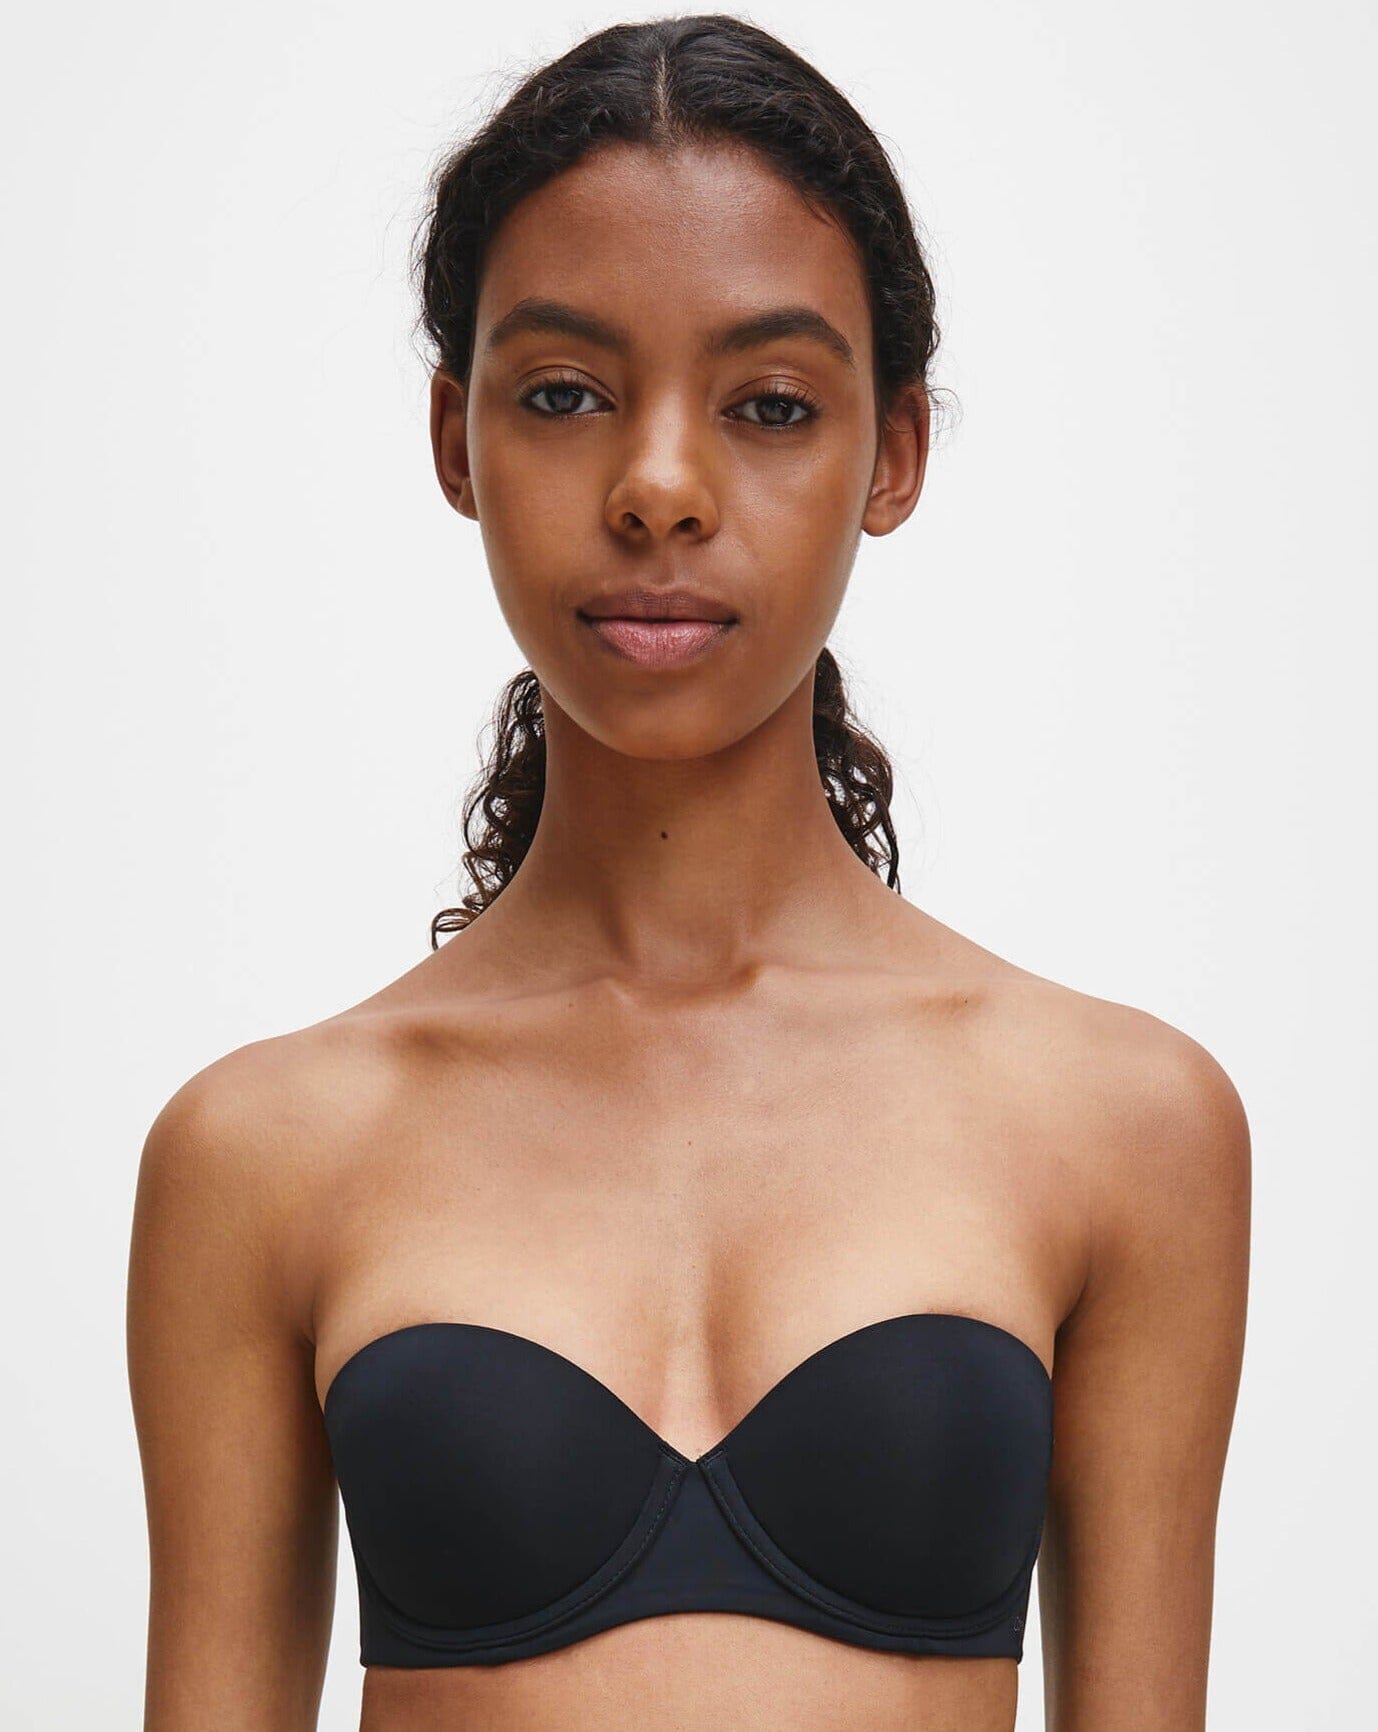 Calvin Klein Women's Form Push Up Bra, Bare, 36C 